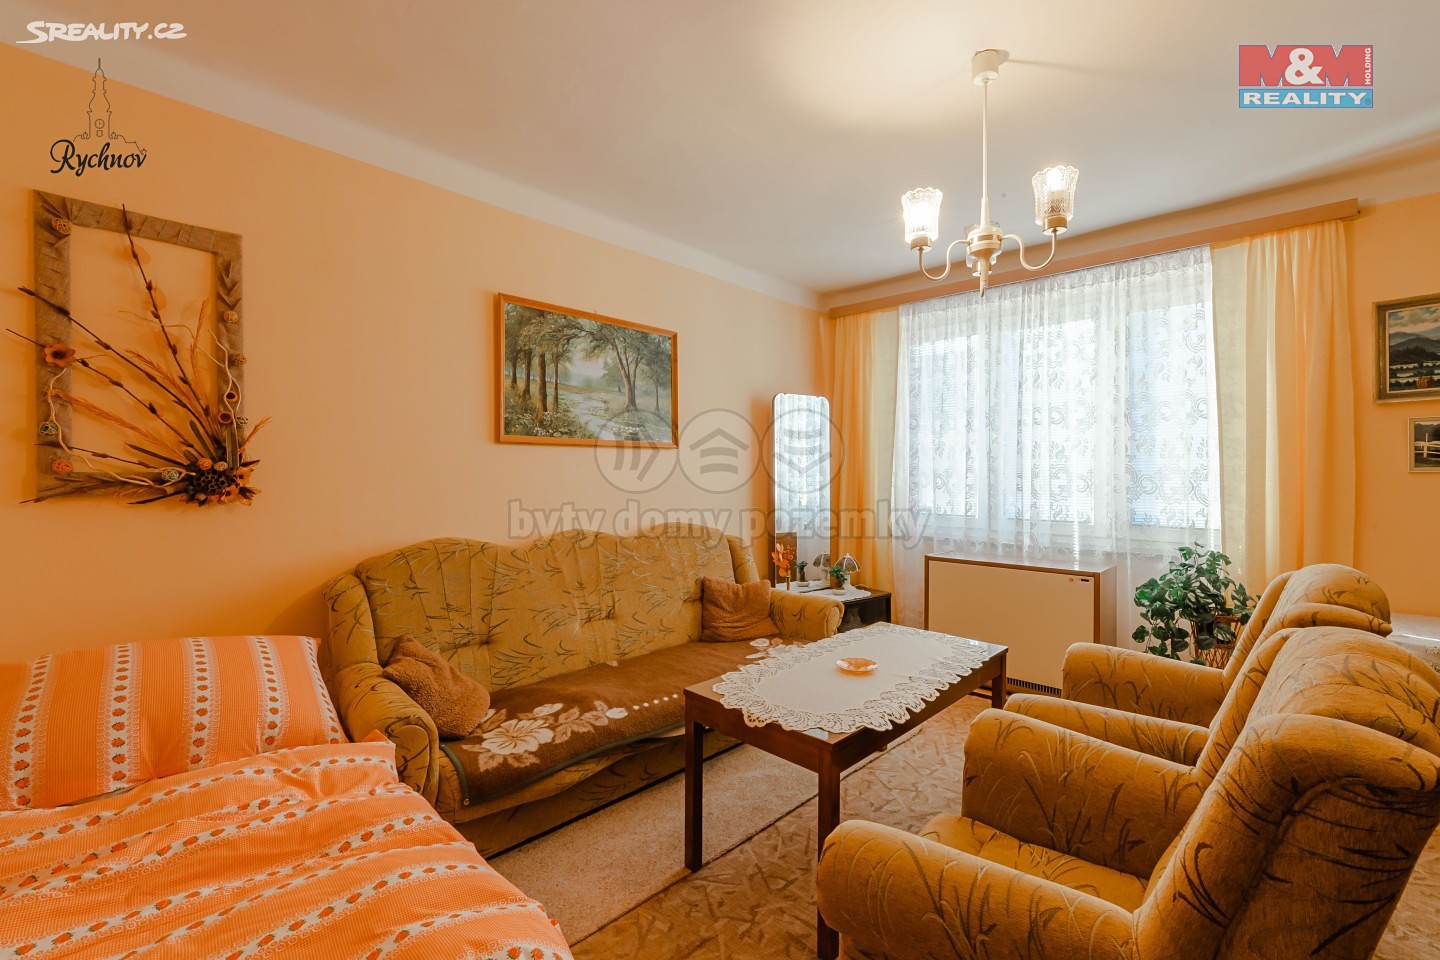 Prodej bytu 1+1 41 m², Havlíčkova, Borohrádek